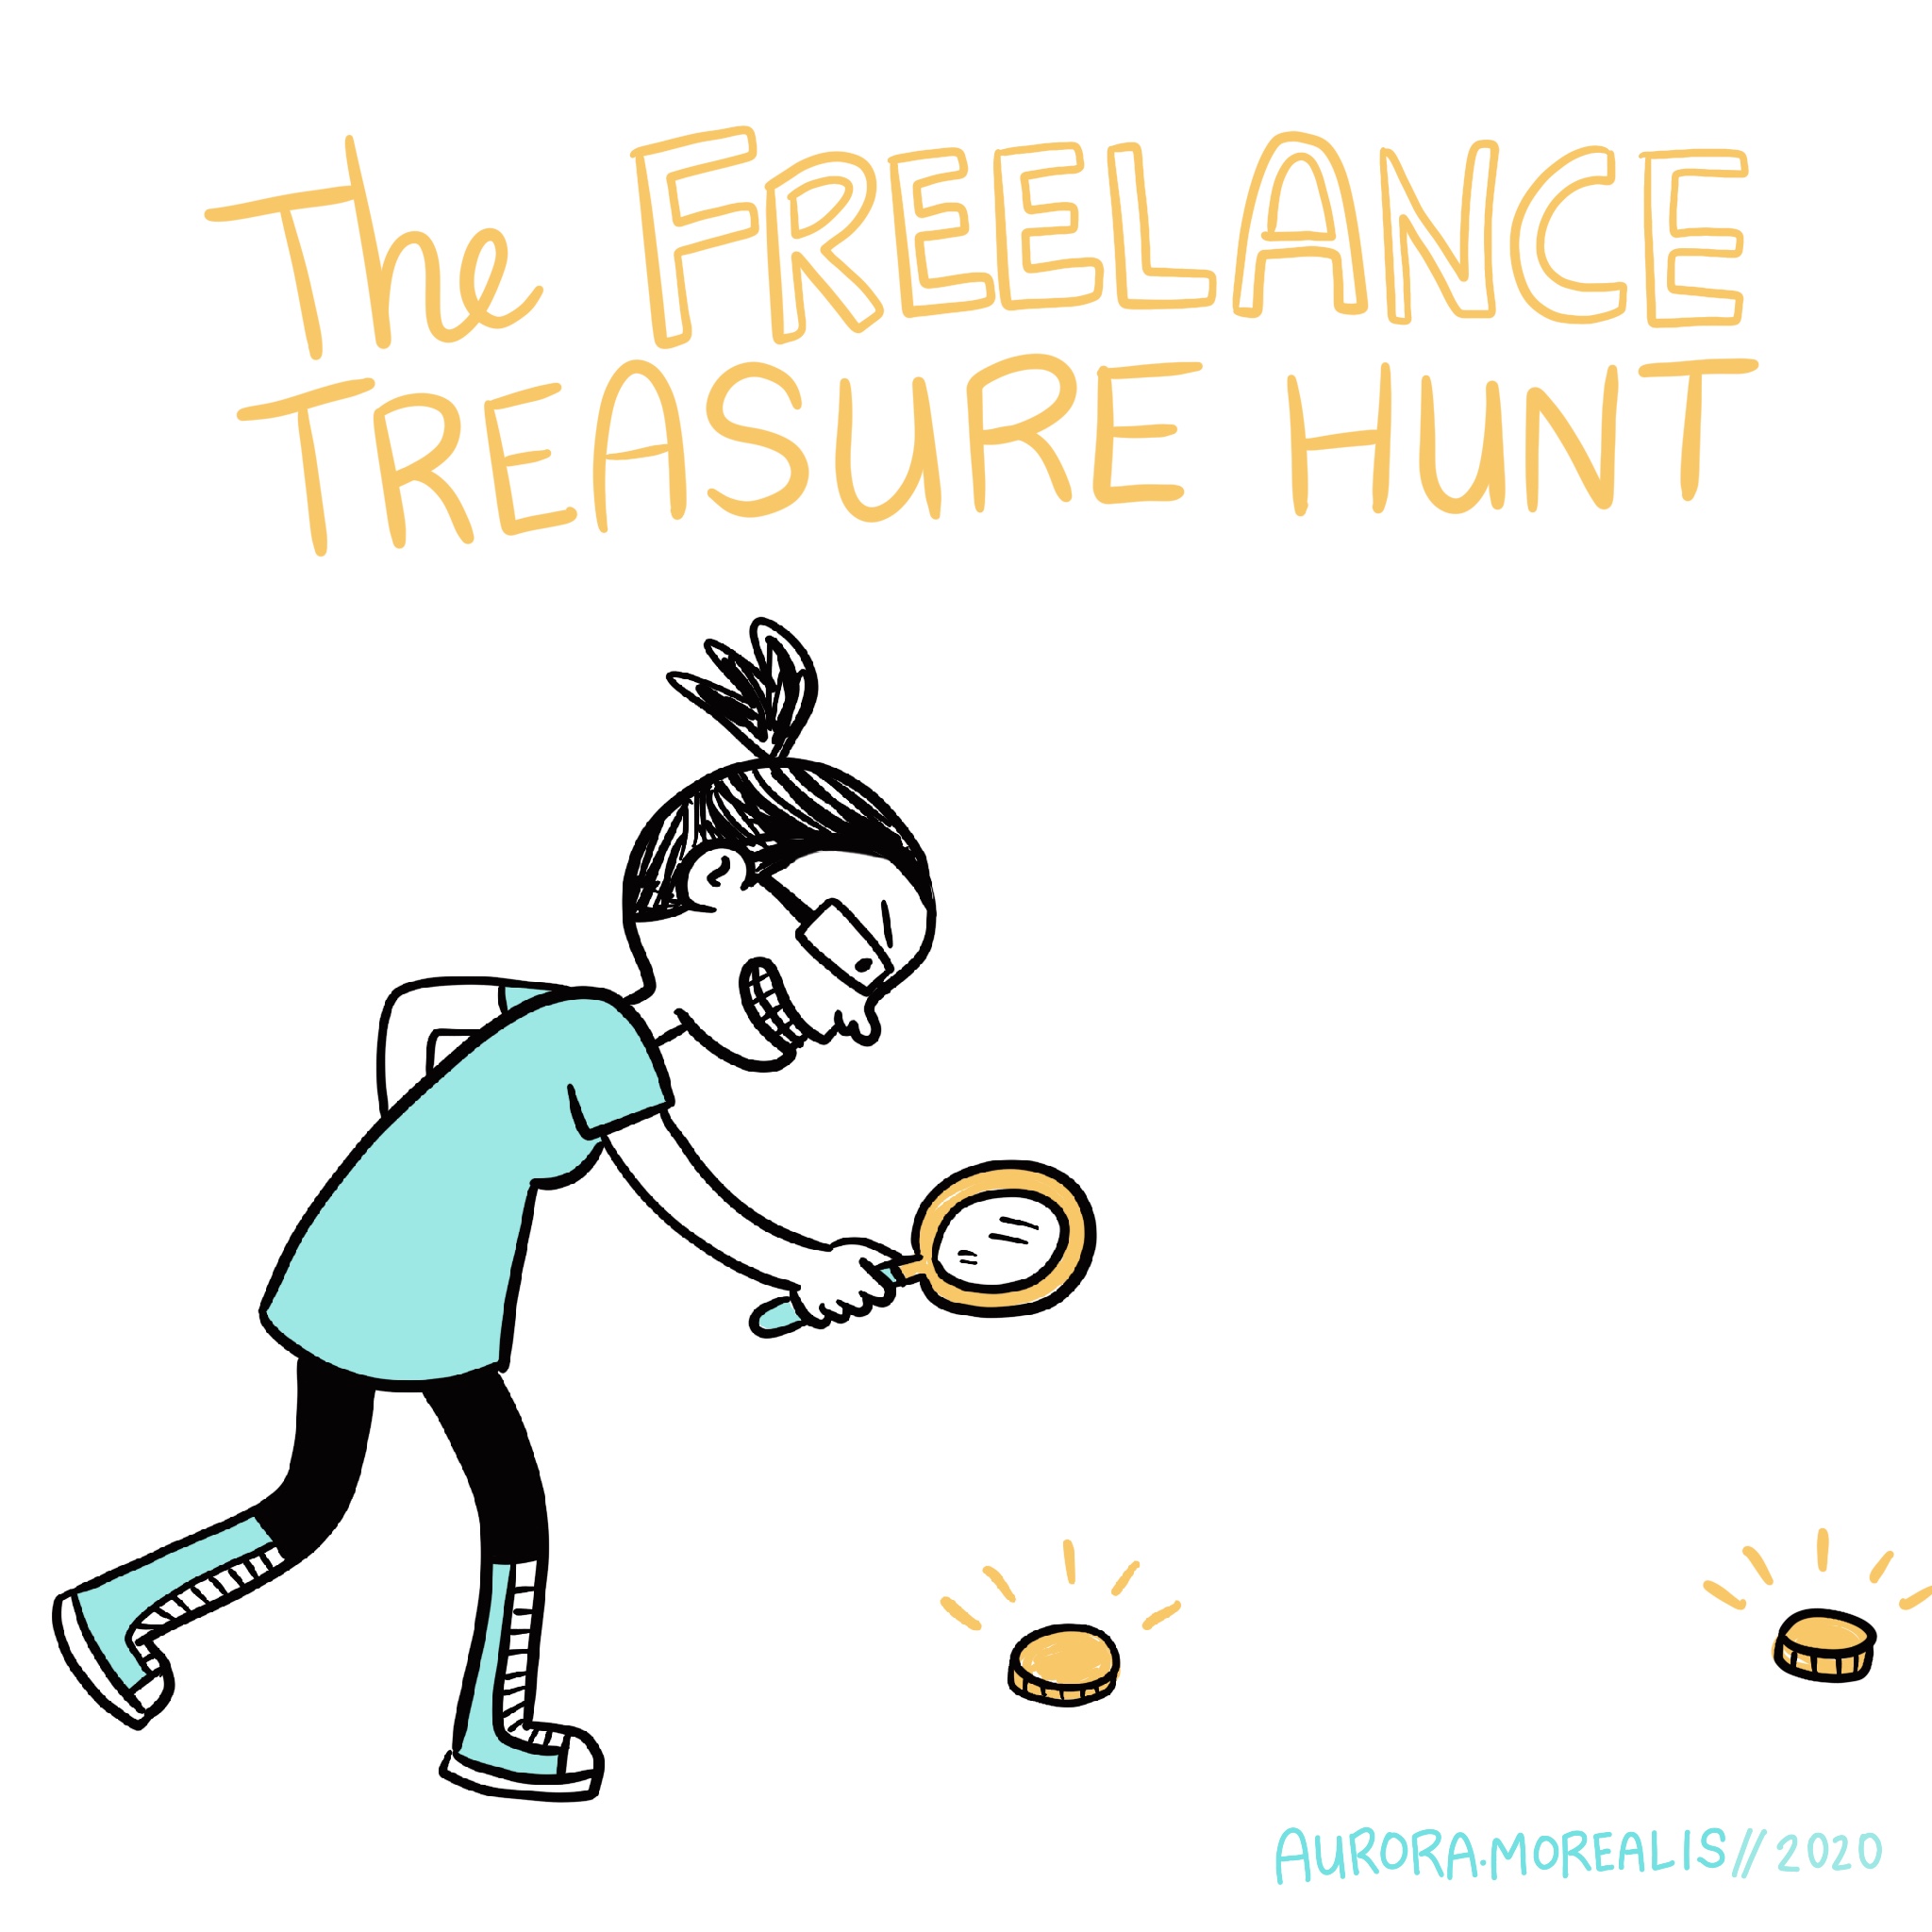 Freelancing is like a treasure hunt. Sometimes you gotta follow the money.